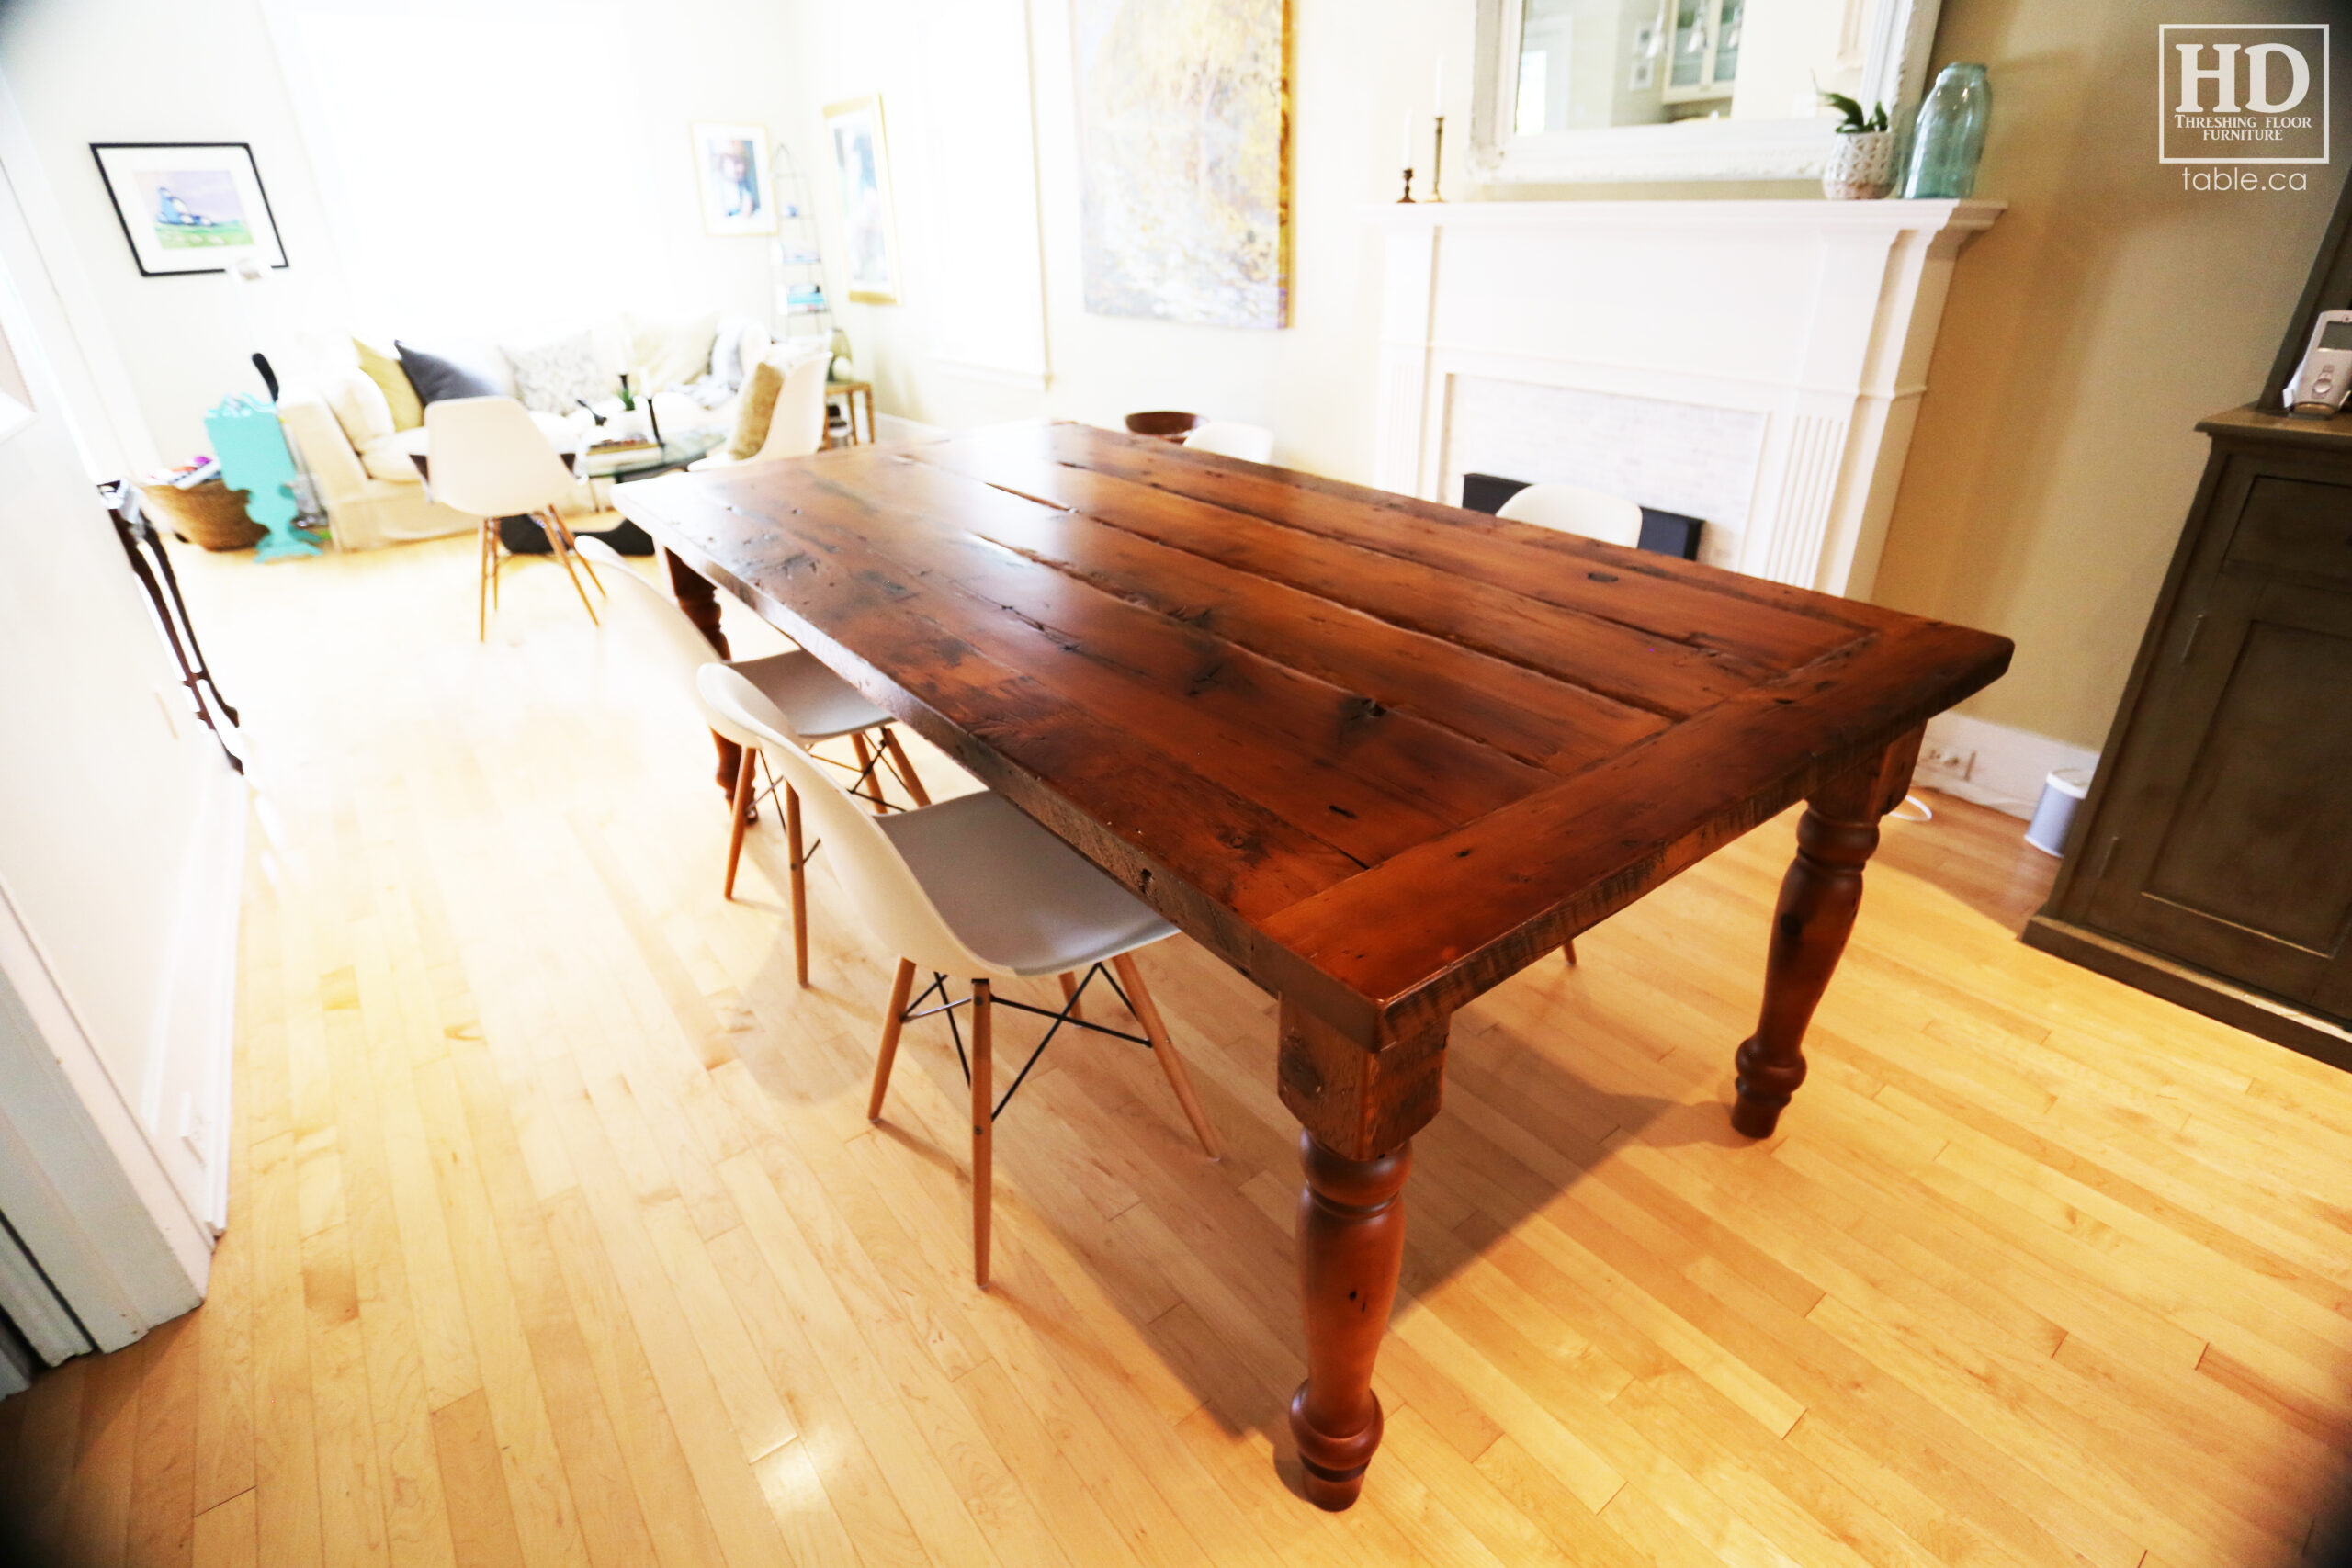 Rustic Harvest Table by HD Threshing Floor Furniture / www.table.ca